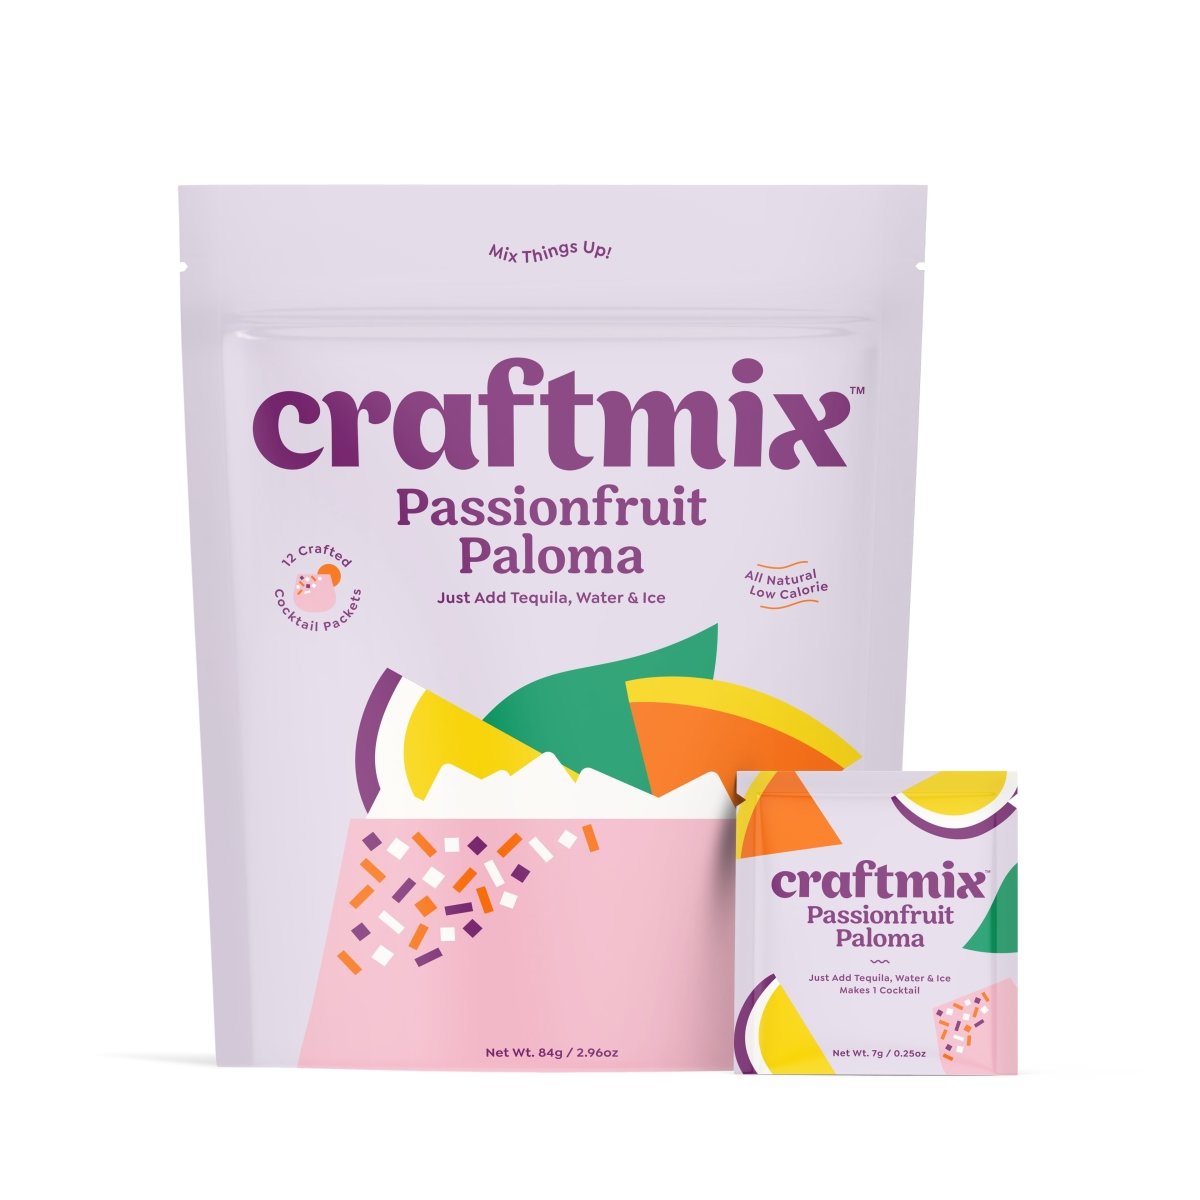 Craftmix Passionfruit Paloma, 36 Pack - lily & onyx